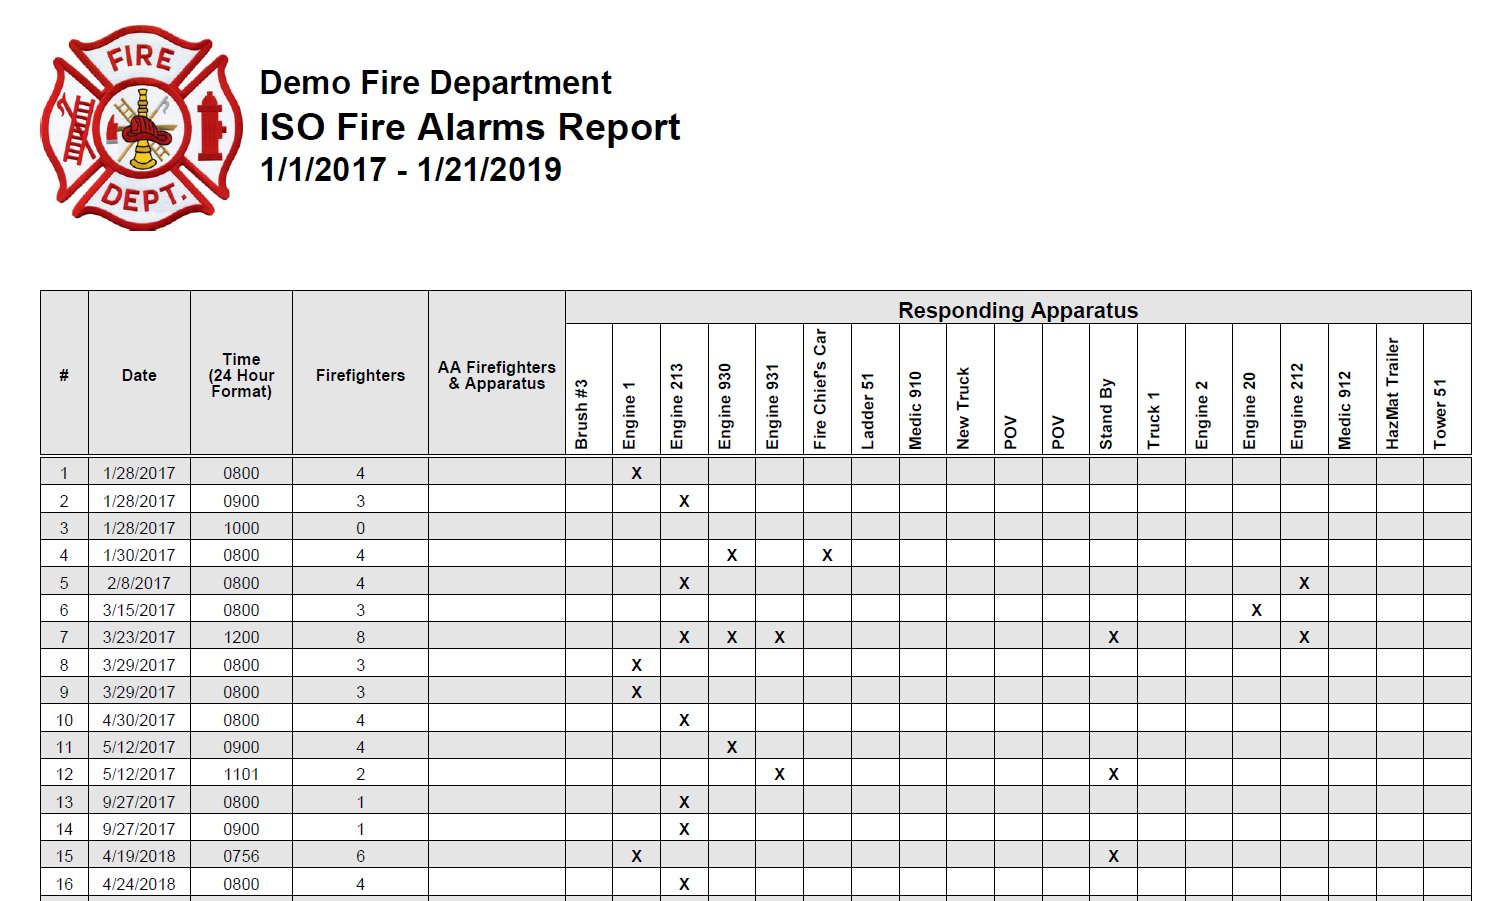 ISOIncidentReport - Fire Station Software, LLC